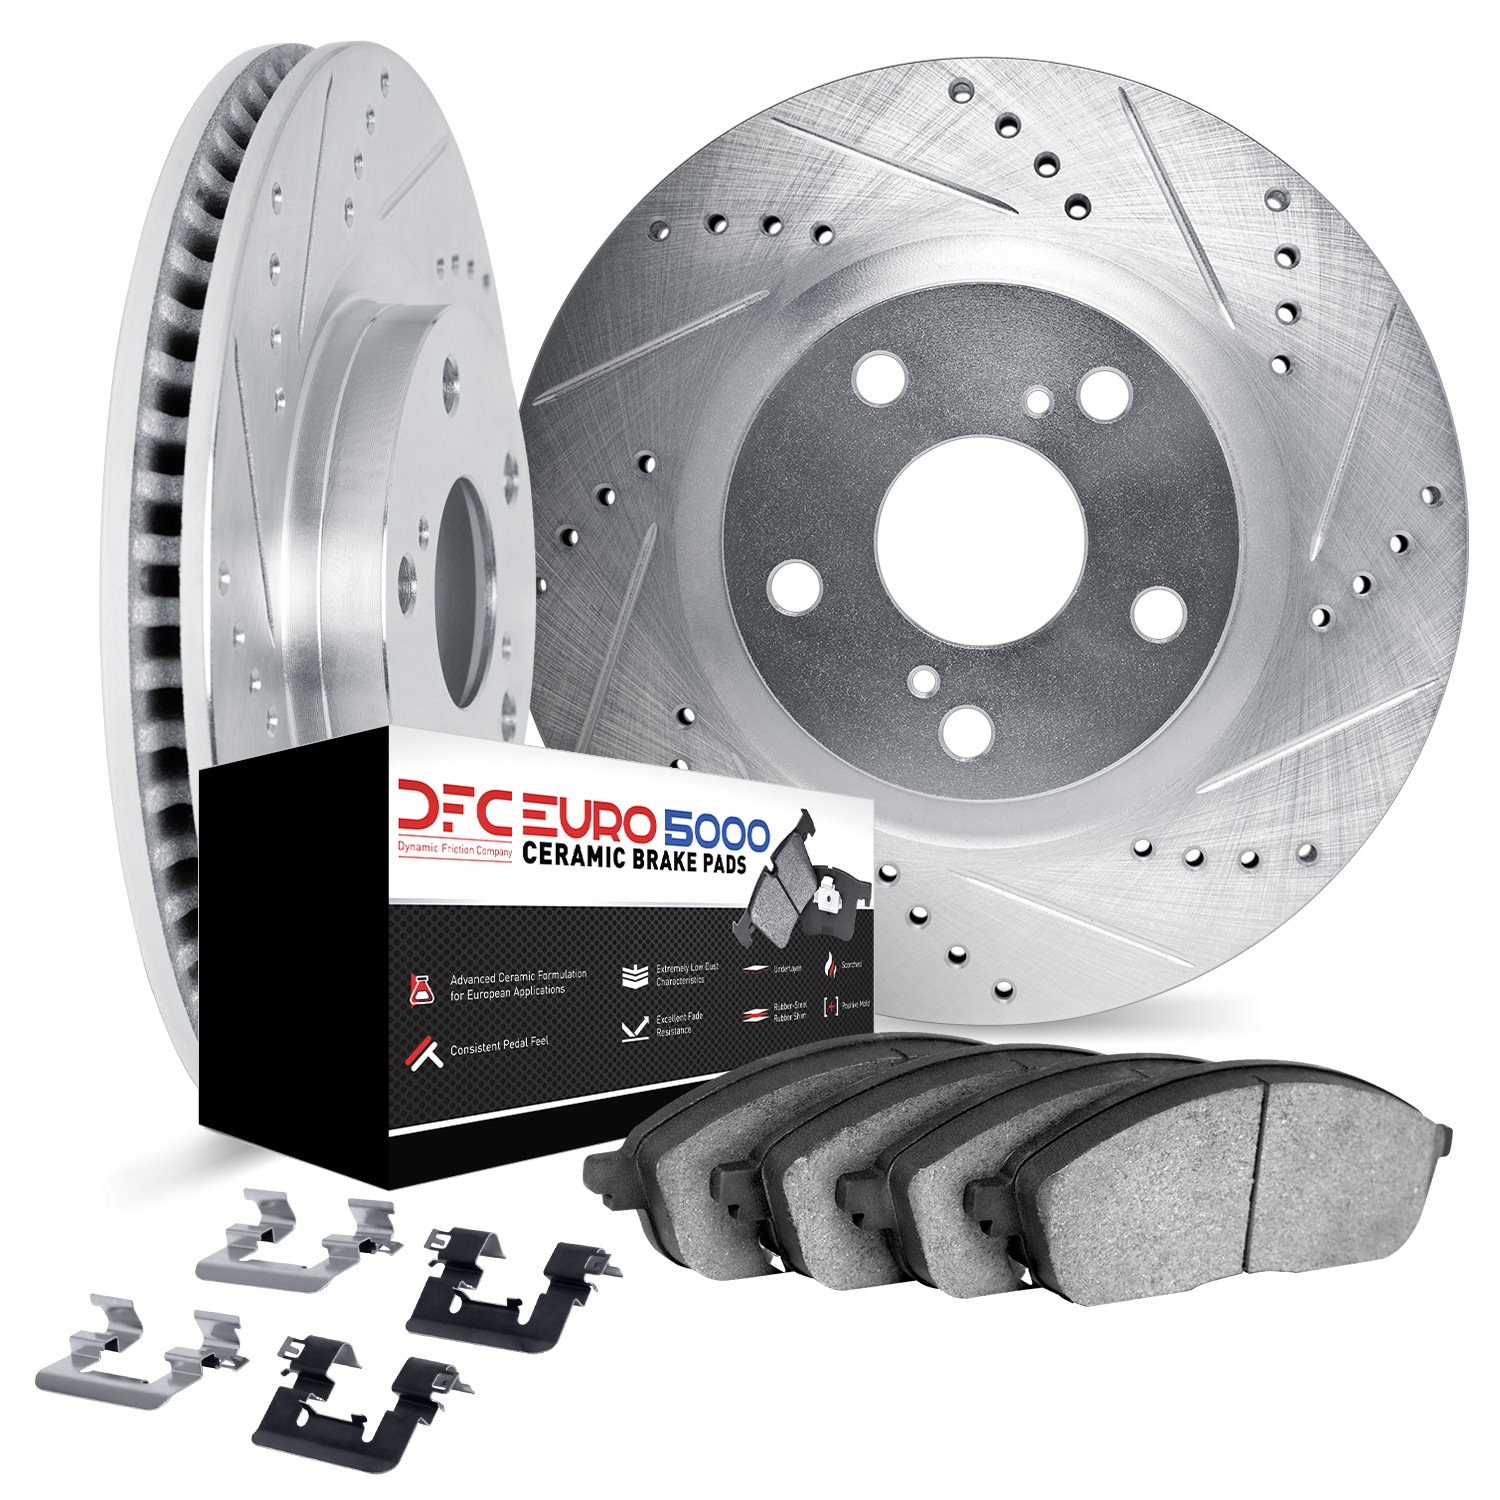 7612-54026 Drilled/Slotted Brake Rotors w/5000 Euro Ceramic Brake Pads Kit & Hardware [Silver], 2013-2014 Ford/Lincoln/Mercury/M